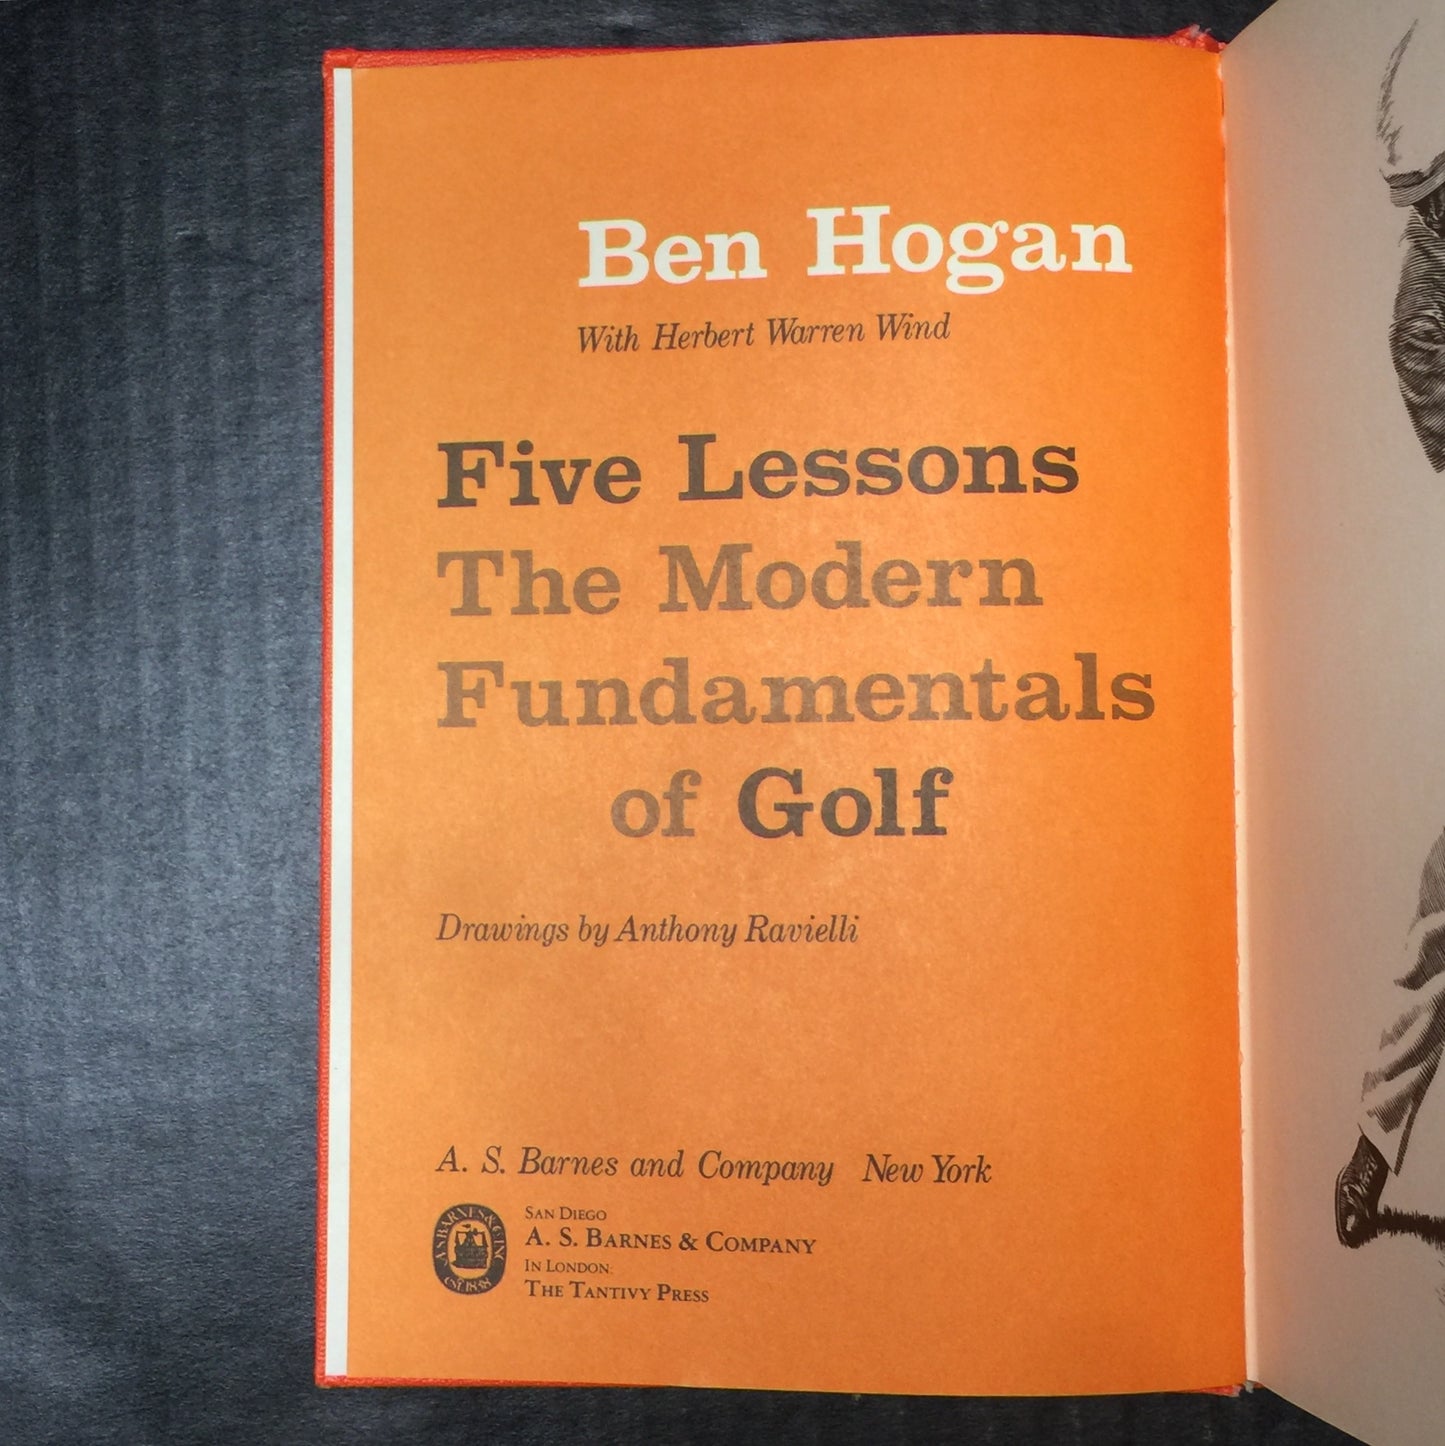 Ben Hogan's Five Lessons - Ben Hogan and Herbert Warren Wind - Signed - Early Print - 1957